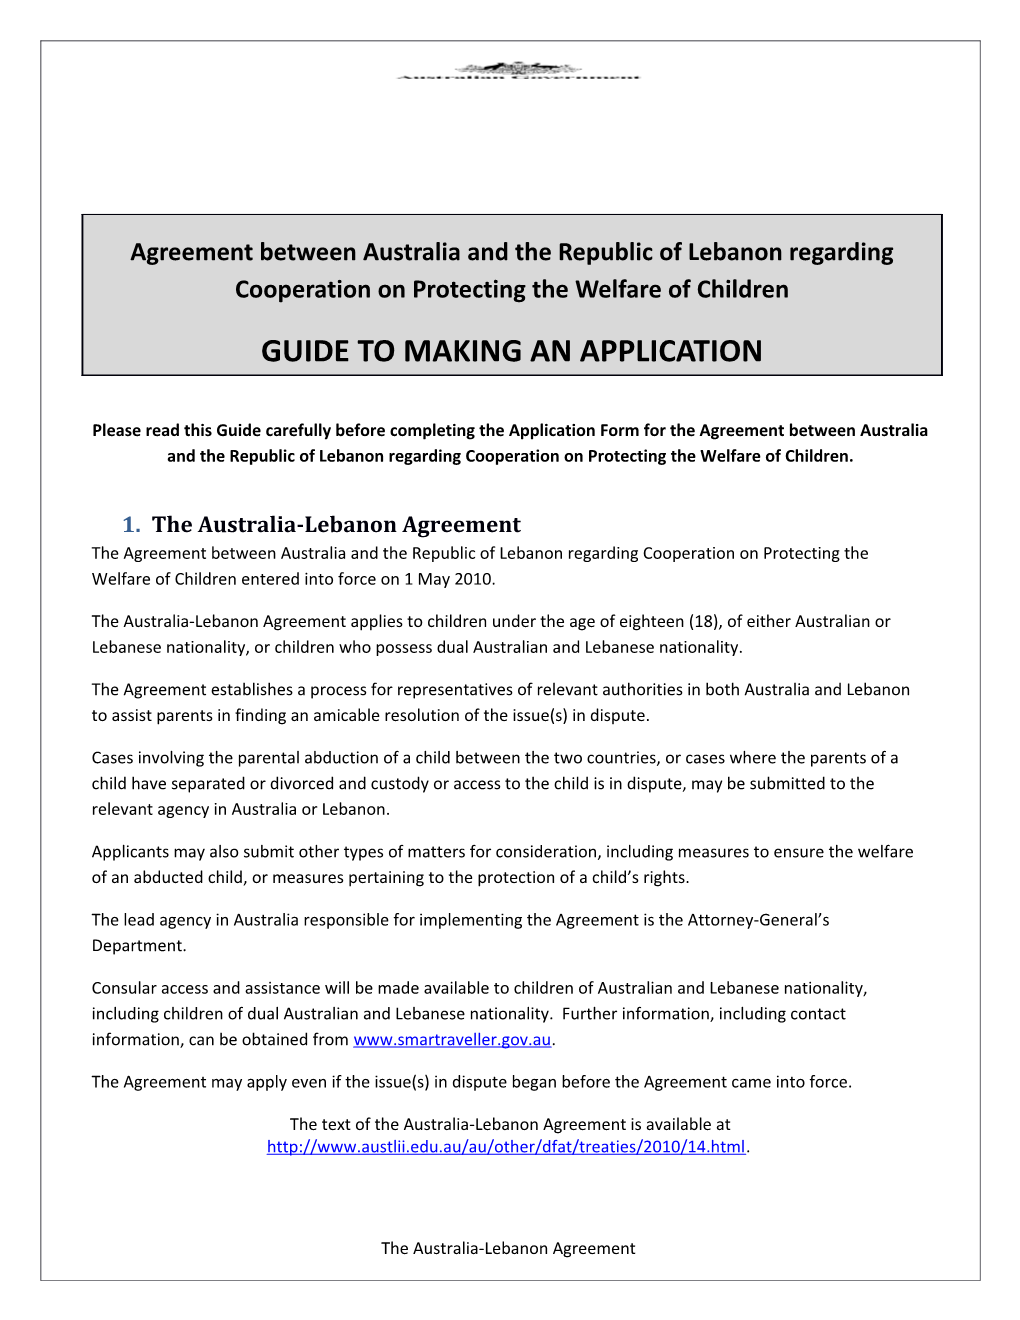 Australia Lebanon Agreement - Application Form